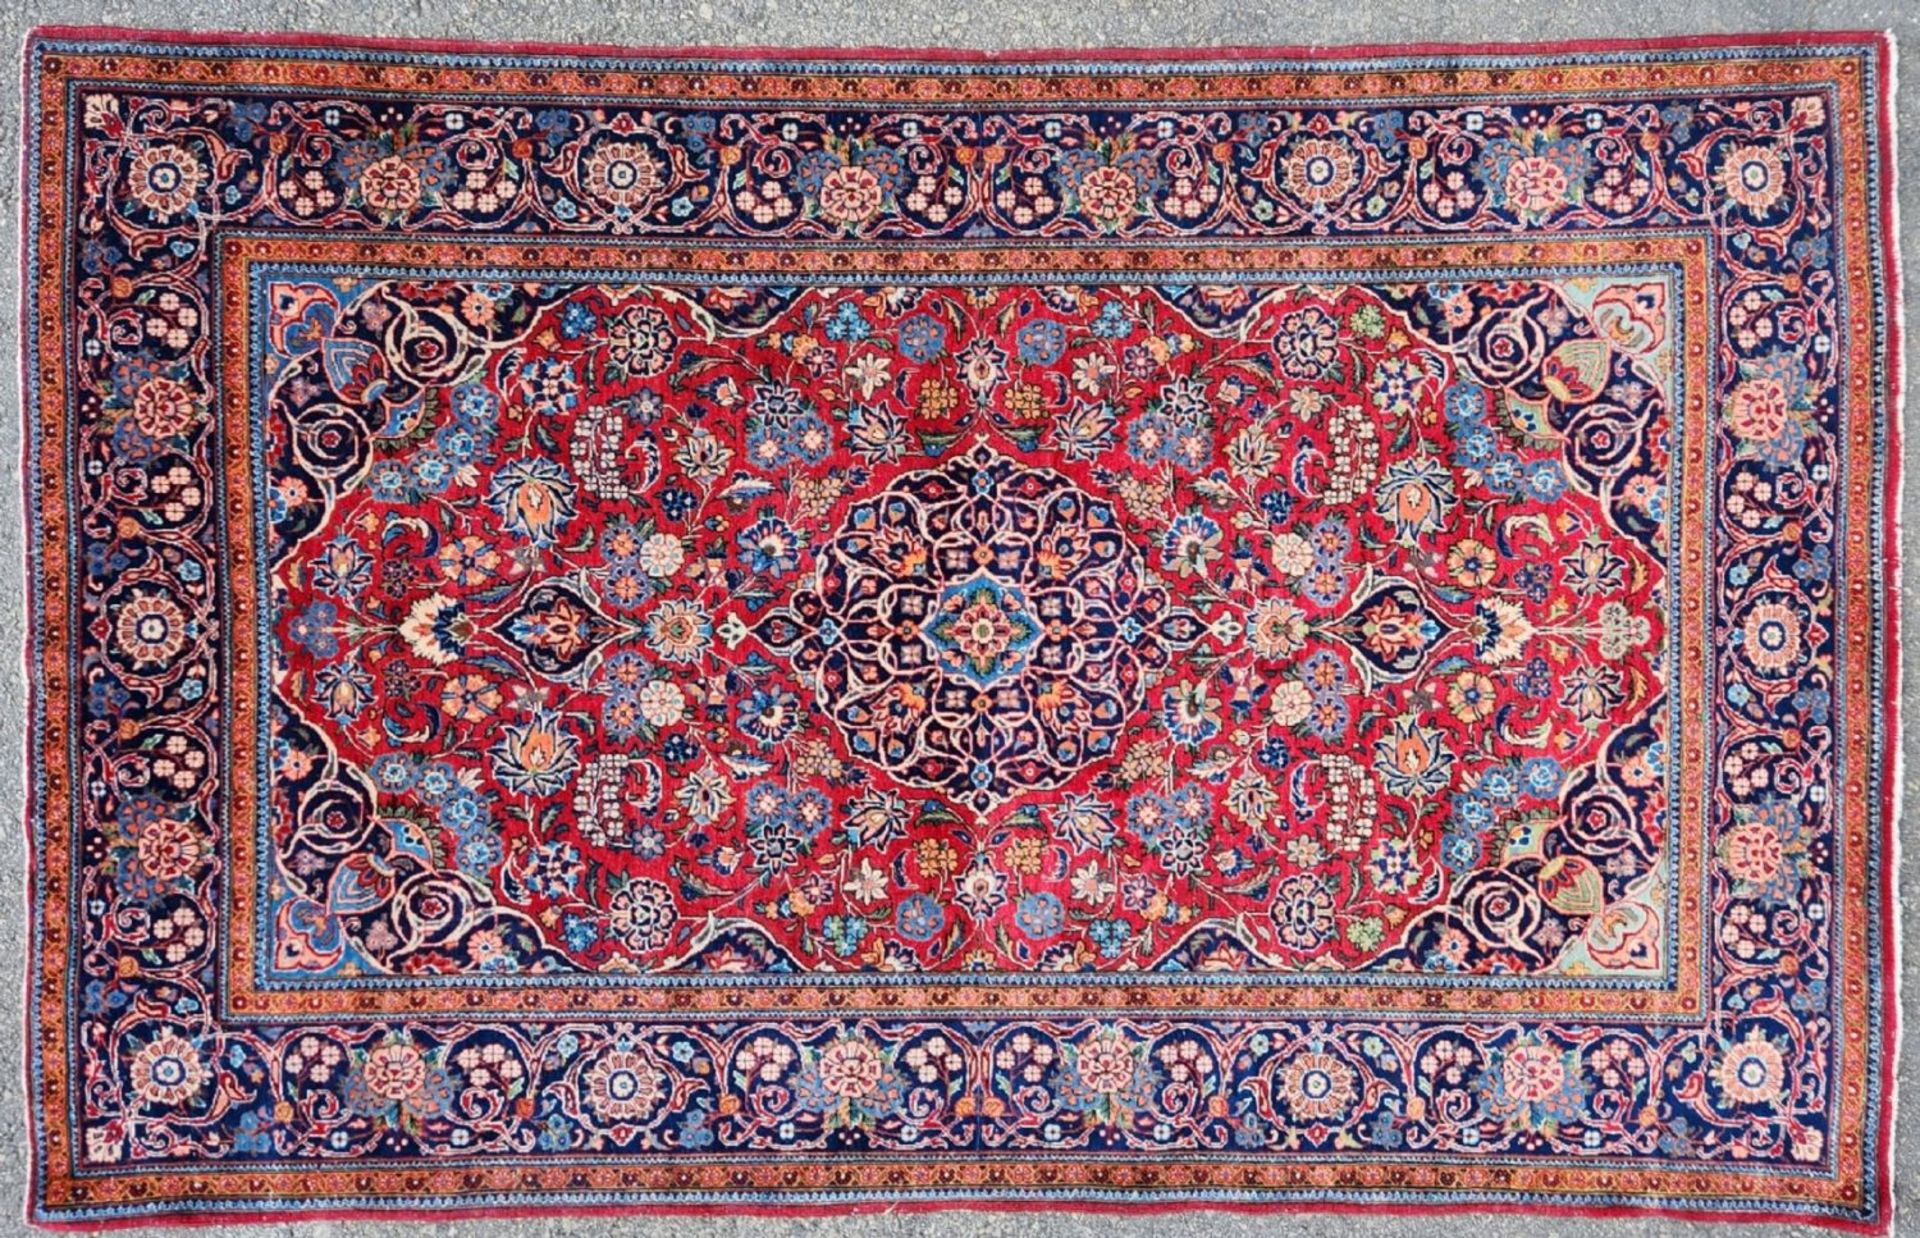 Handmade carpet, carpet size: 205x130 cm.